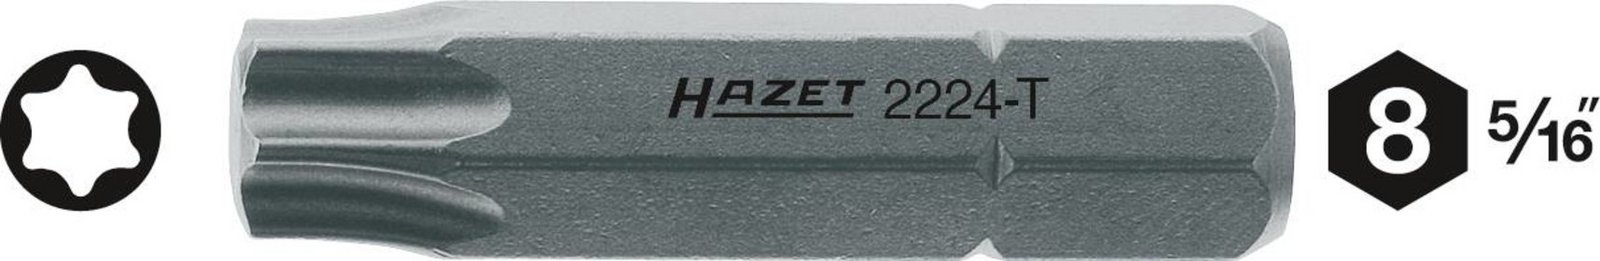 Hazet  2224-T50 bit Torx T 50 Speciální ocel   C 8 1 ks